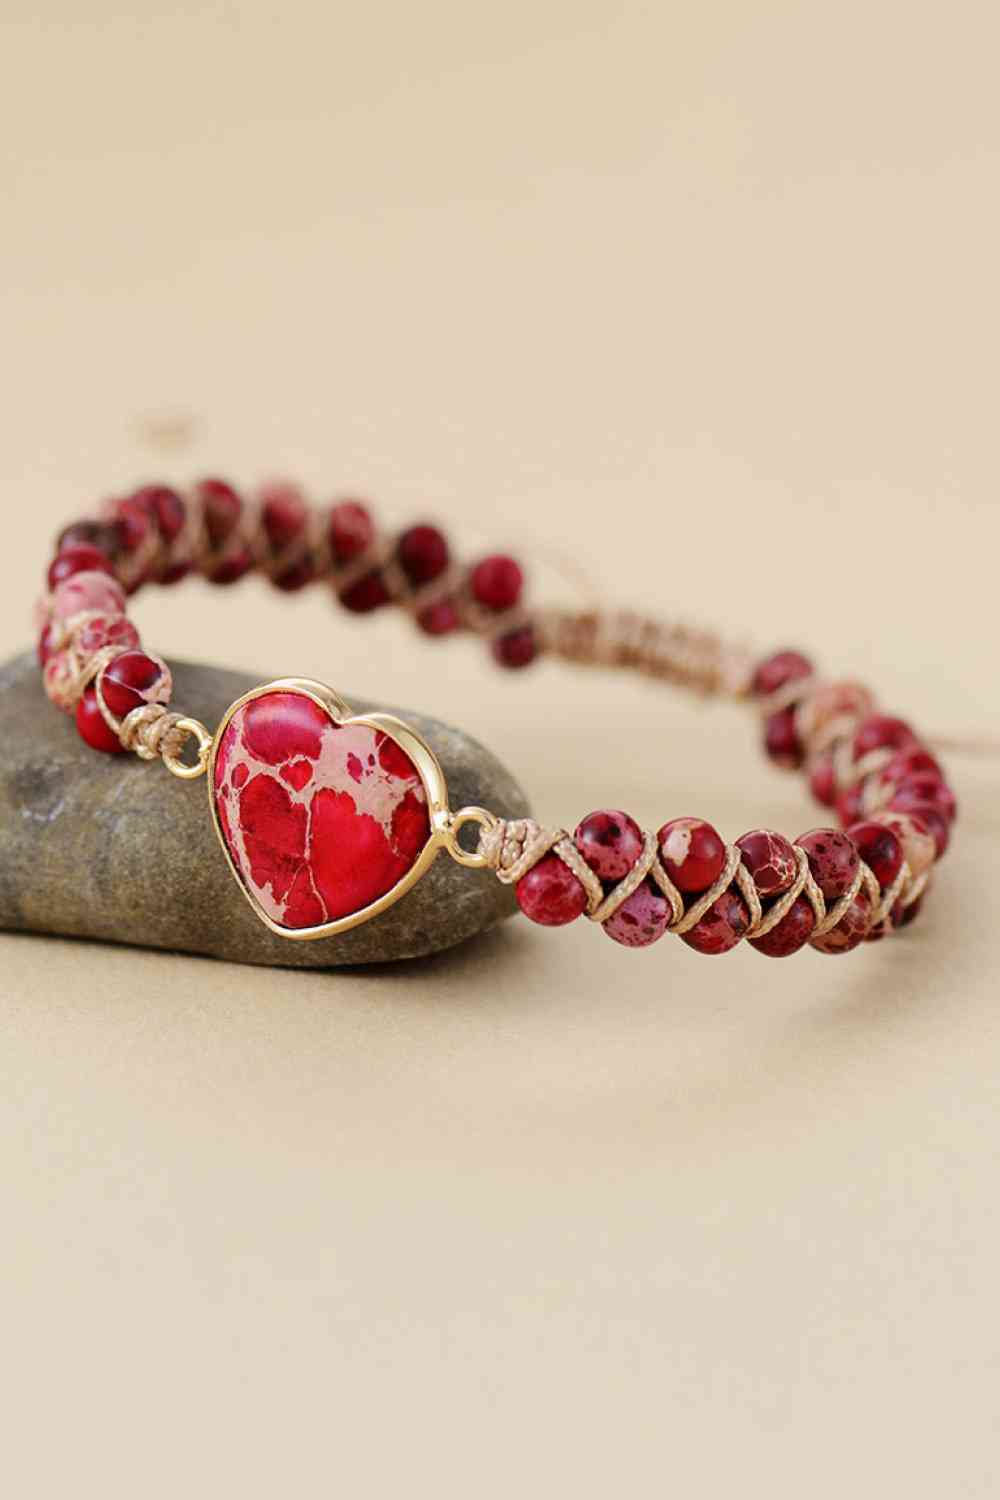 Handmade Heart Shape Natural Stone Bracelet Red One Size